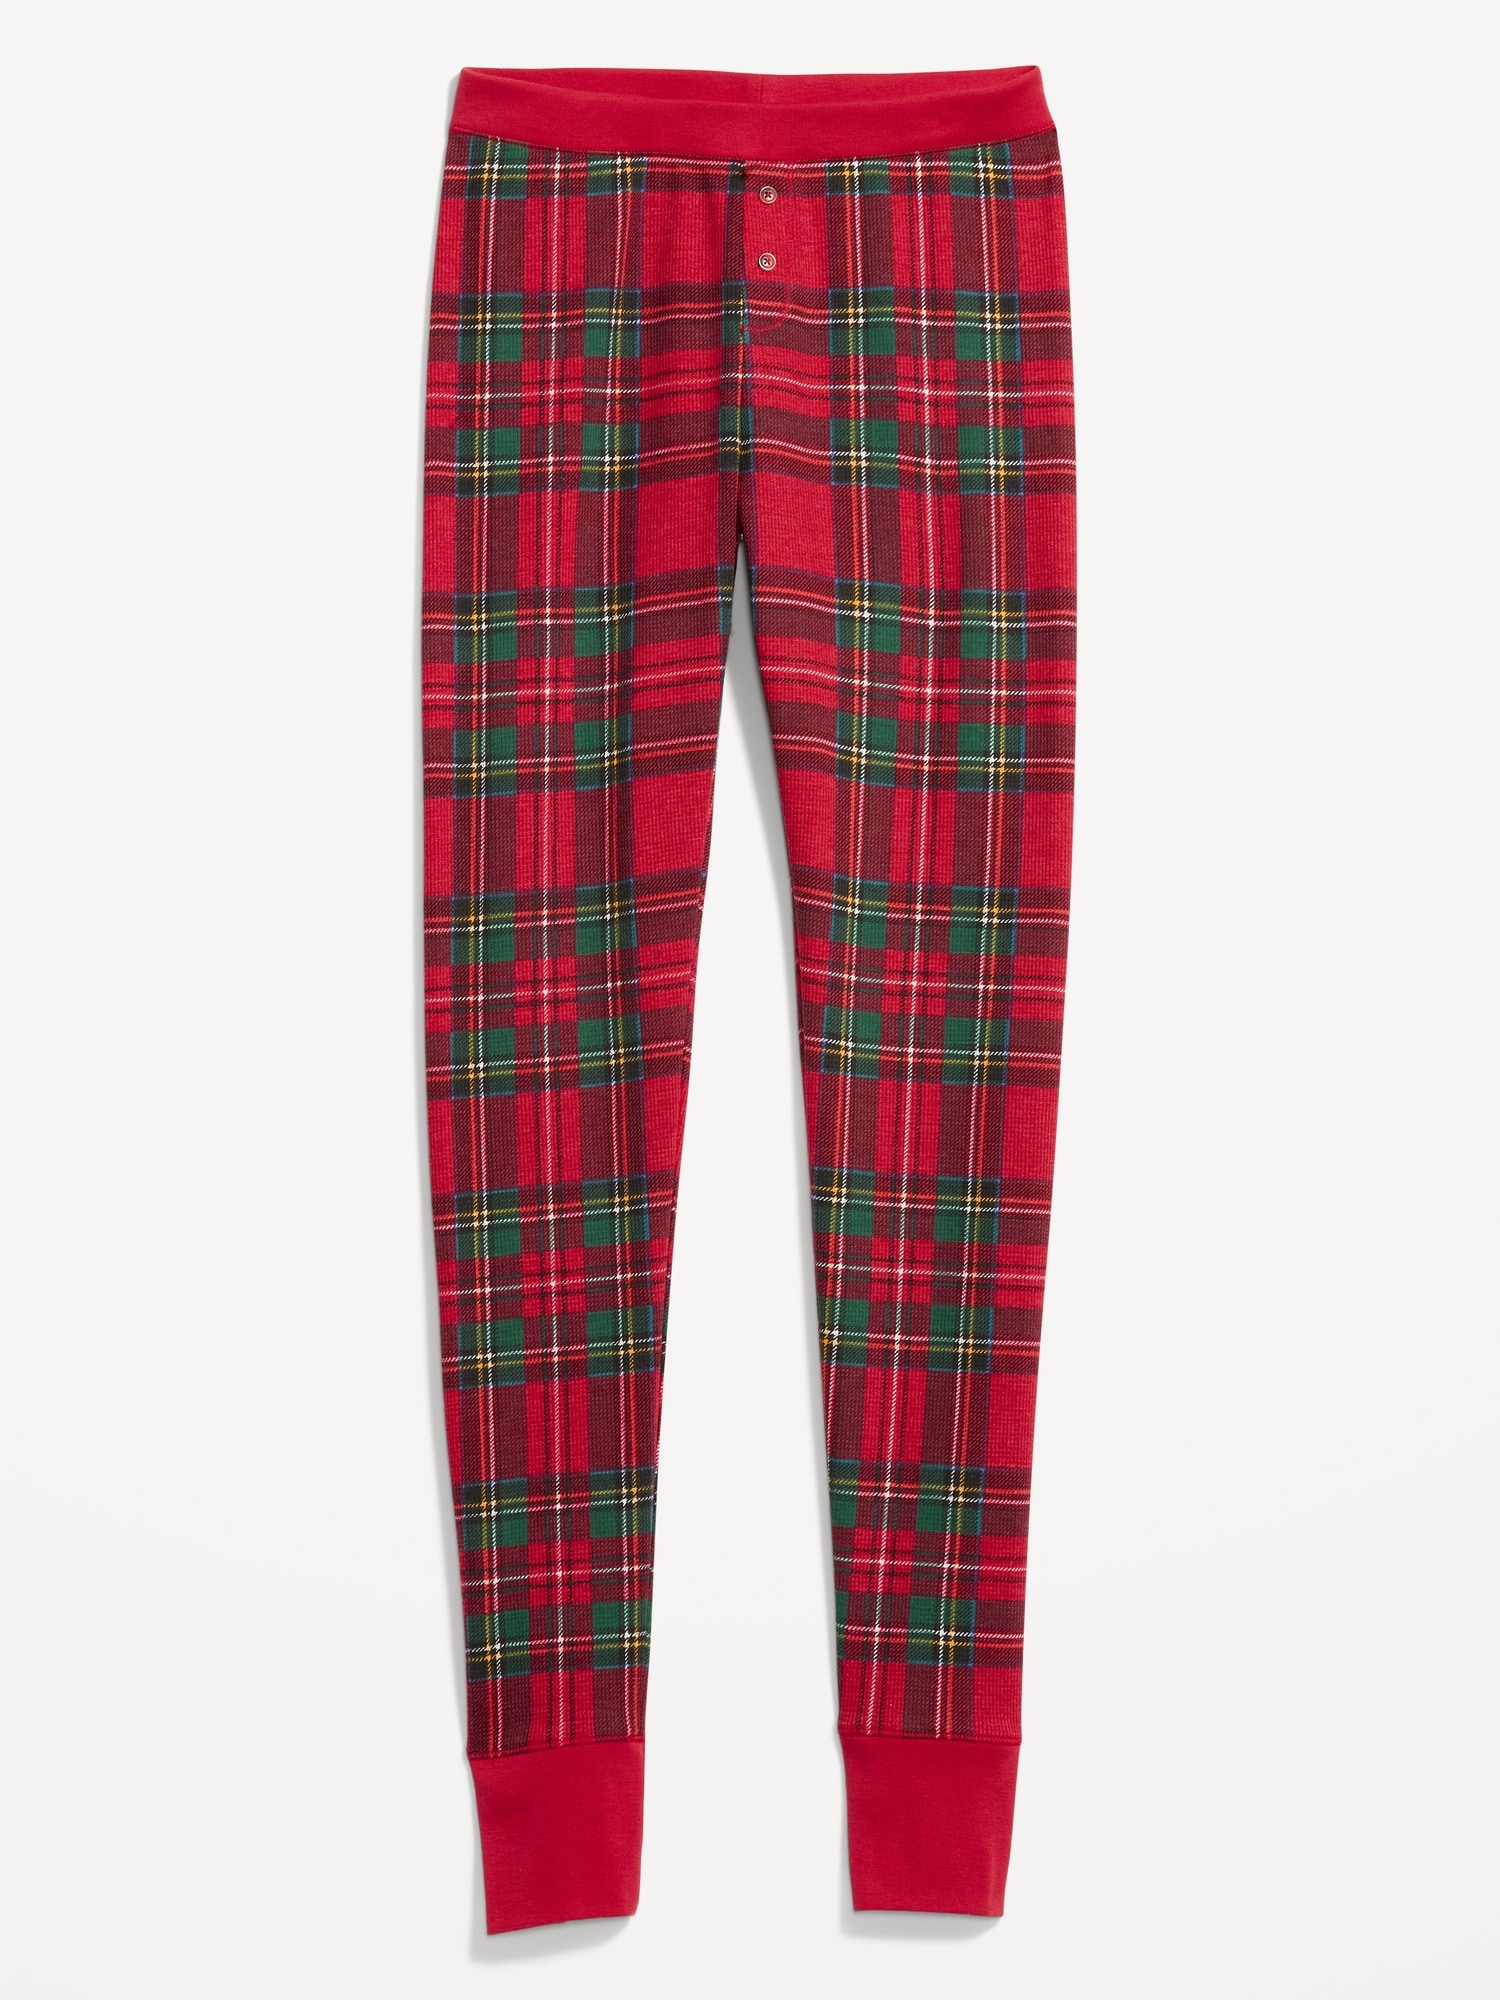 NWT Old Navy Red Pine Tree Thermal Knit Pajama Pants Sleep Leggings Women  SMLXL